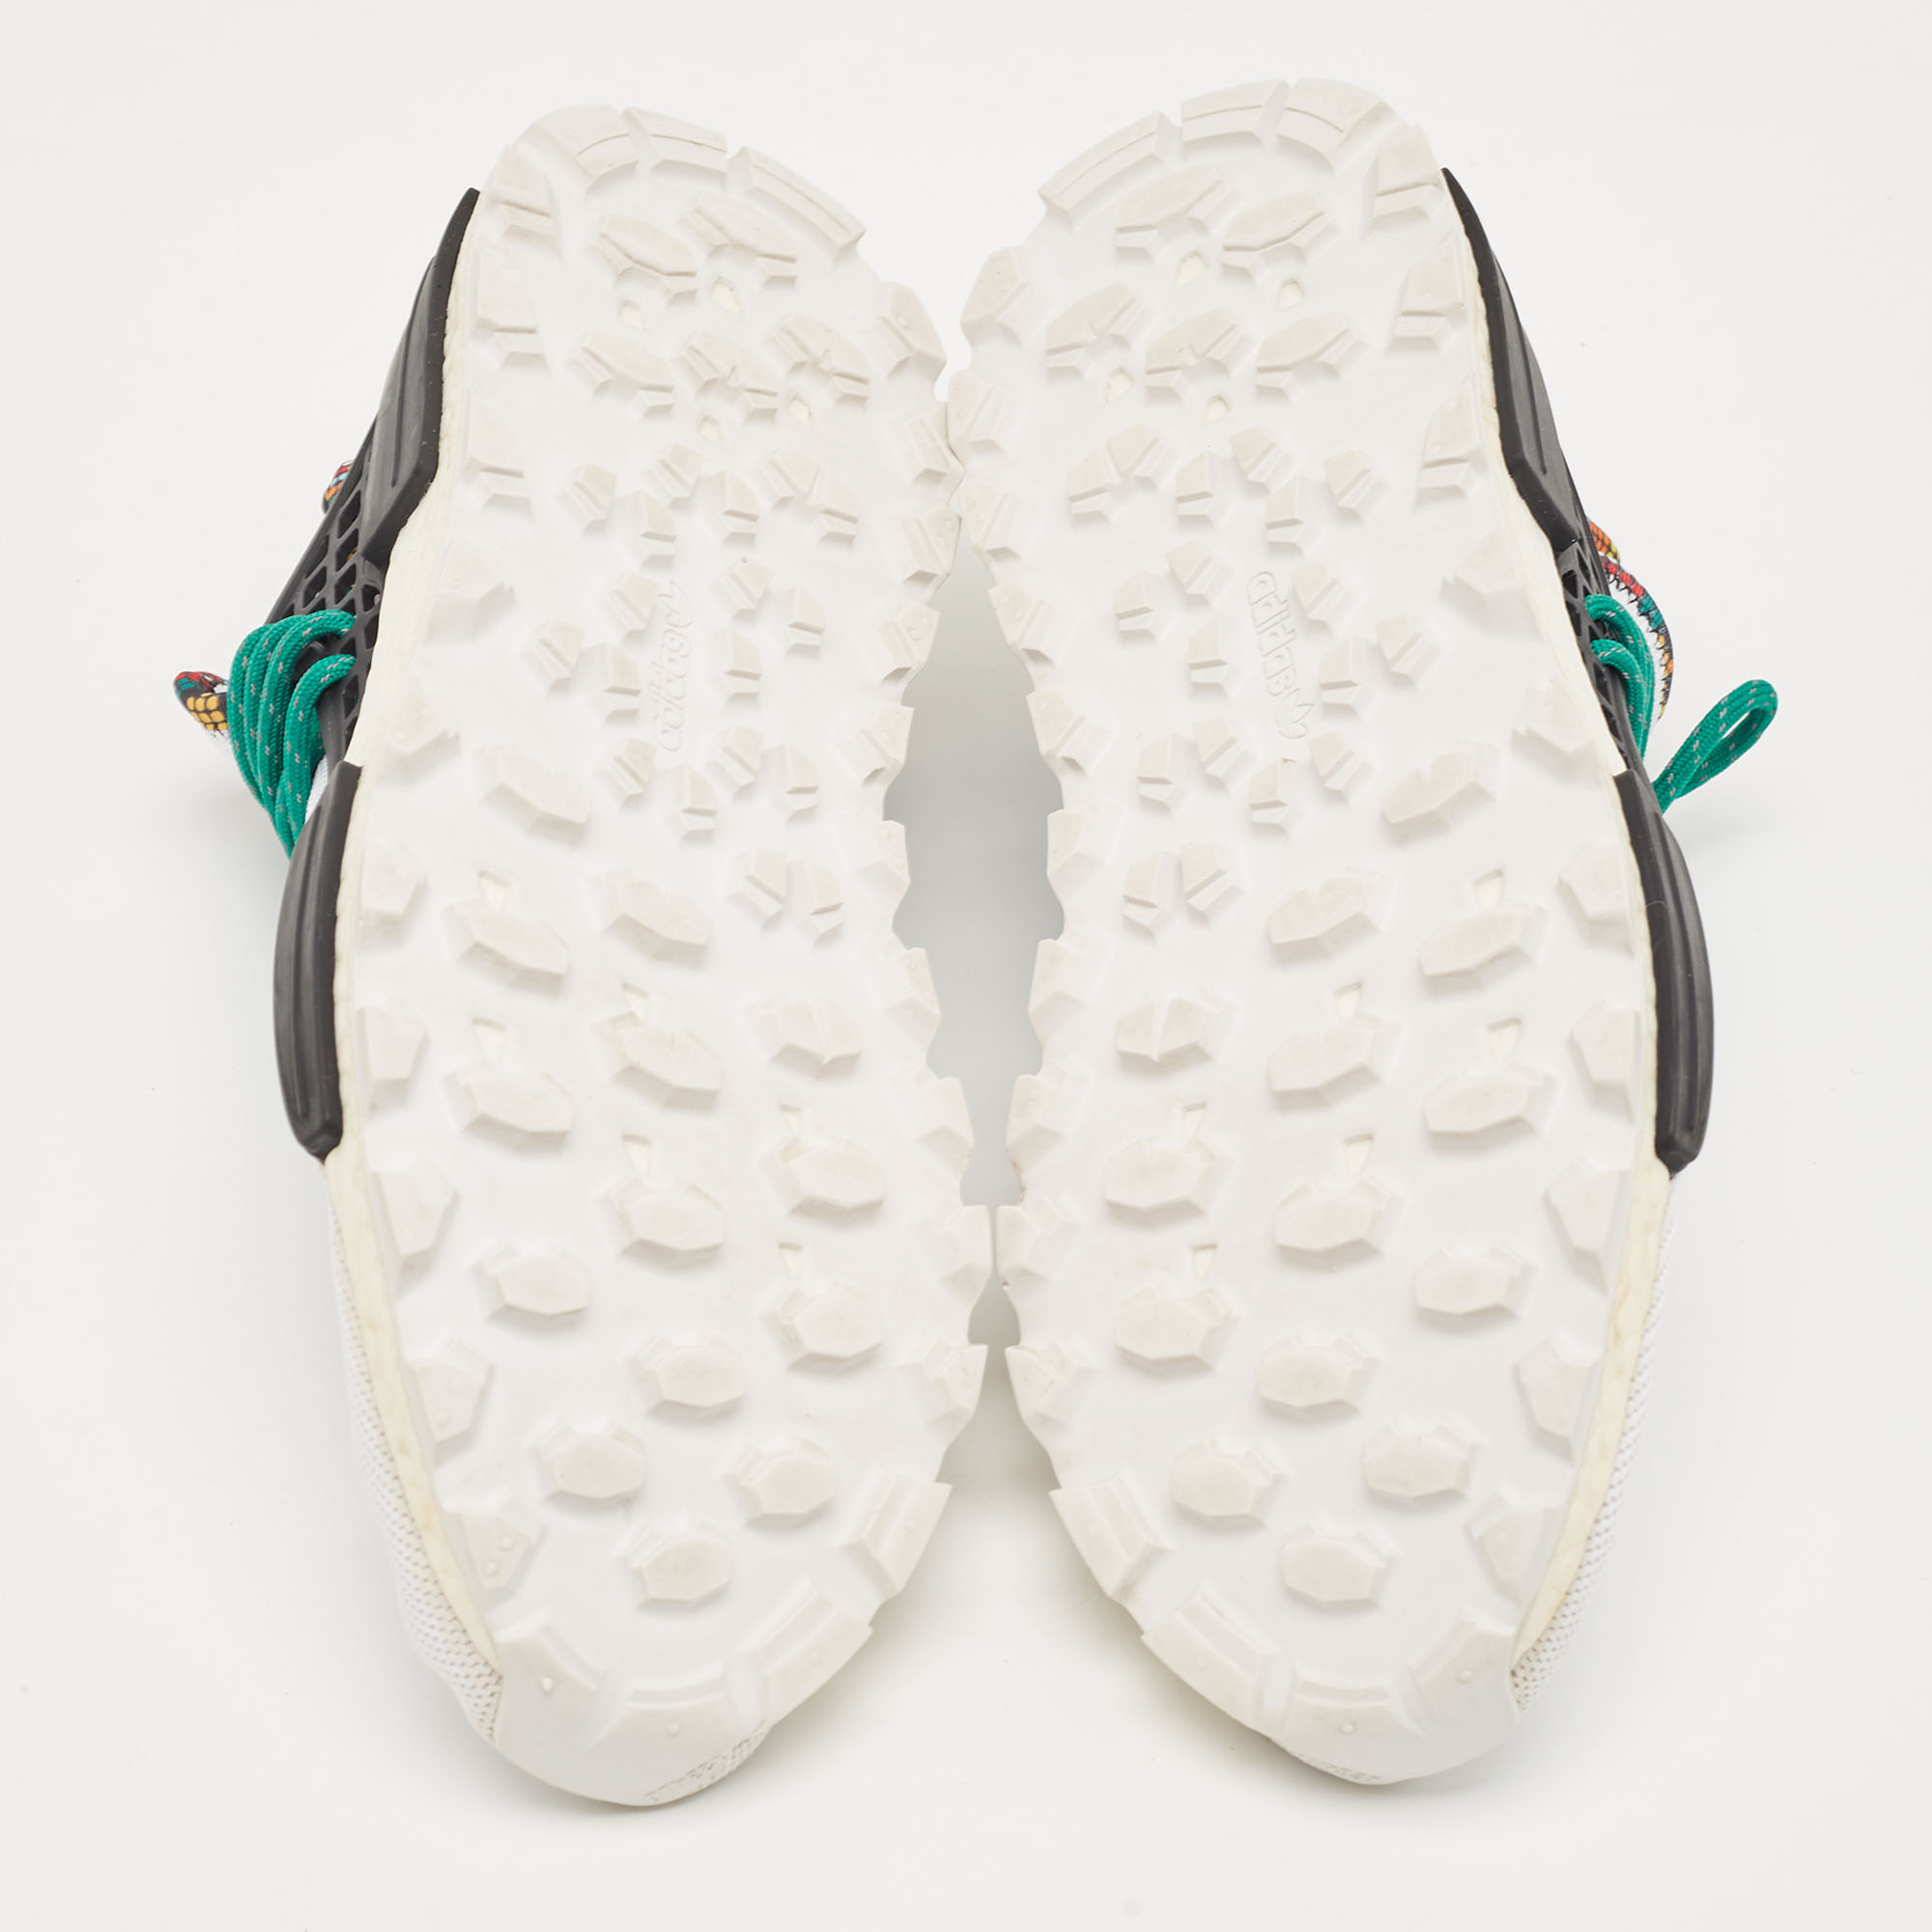 Pharrell Williams X Adidas White Fabric Human Body NMD Sneakers Size 46 2/3